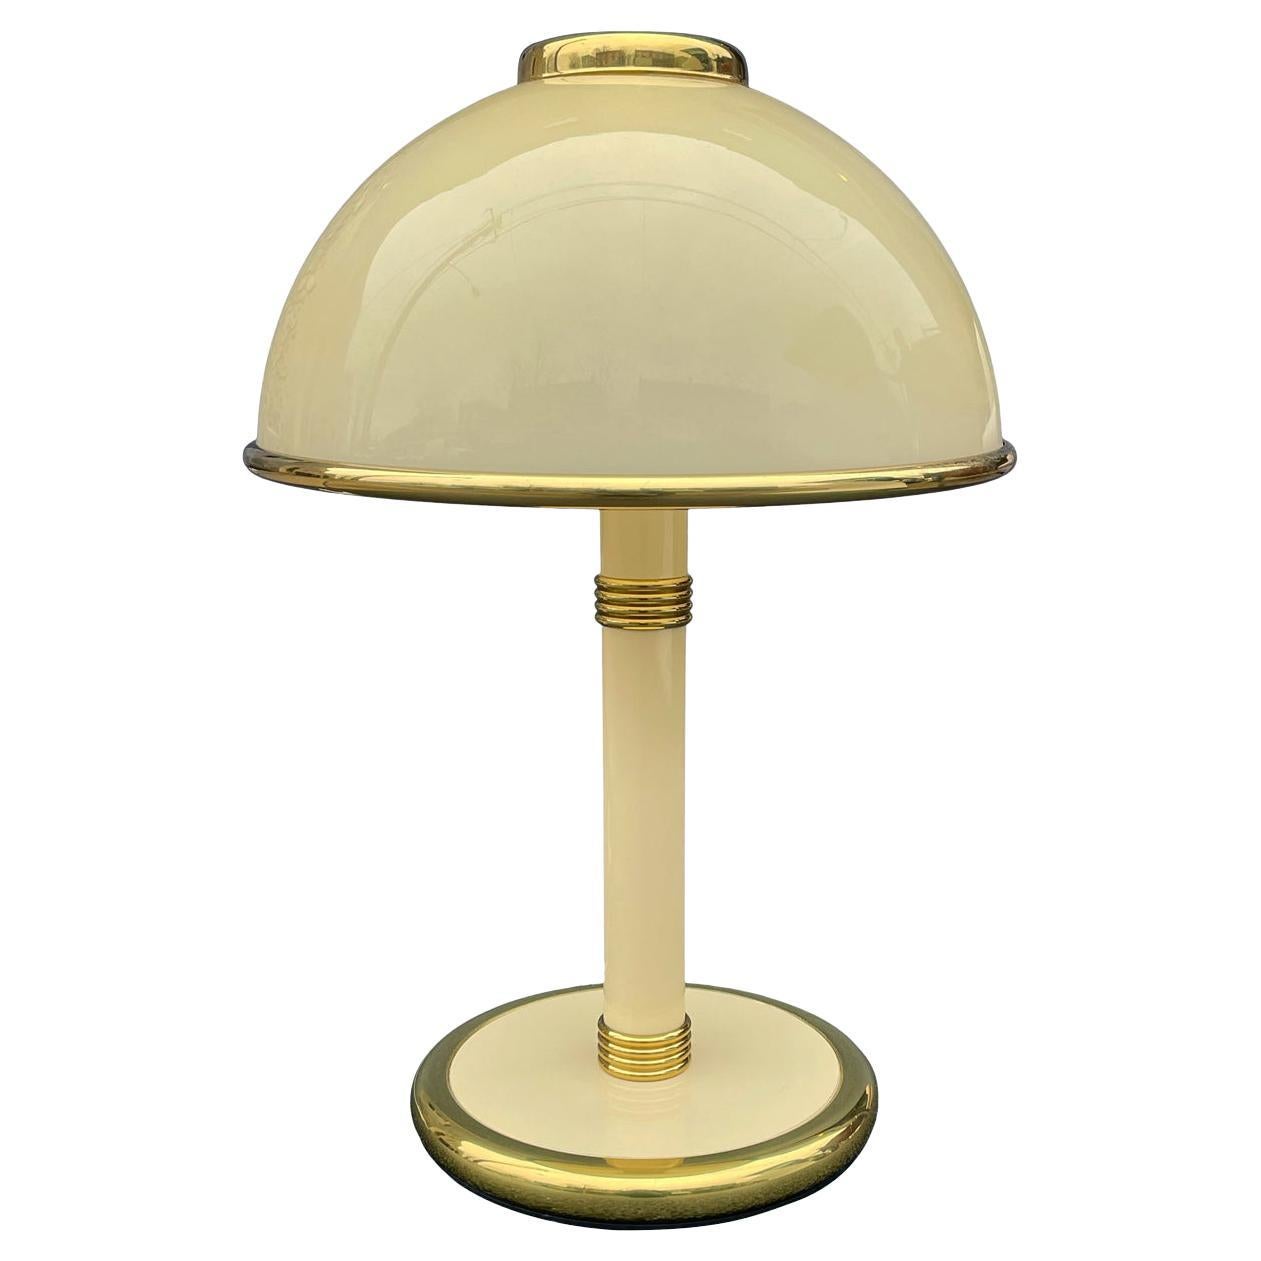 Mid-Century Italian Modern Art Glass Mushroom Table Lamp by Mazzega with Brass